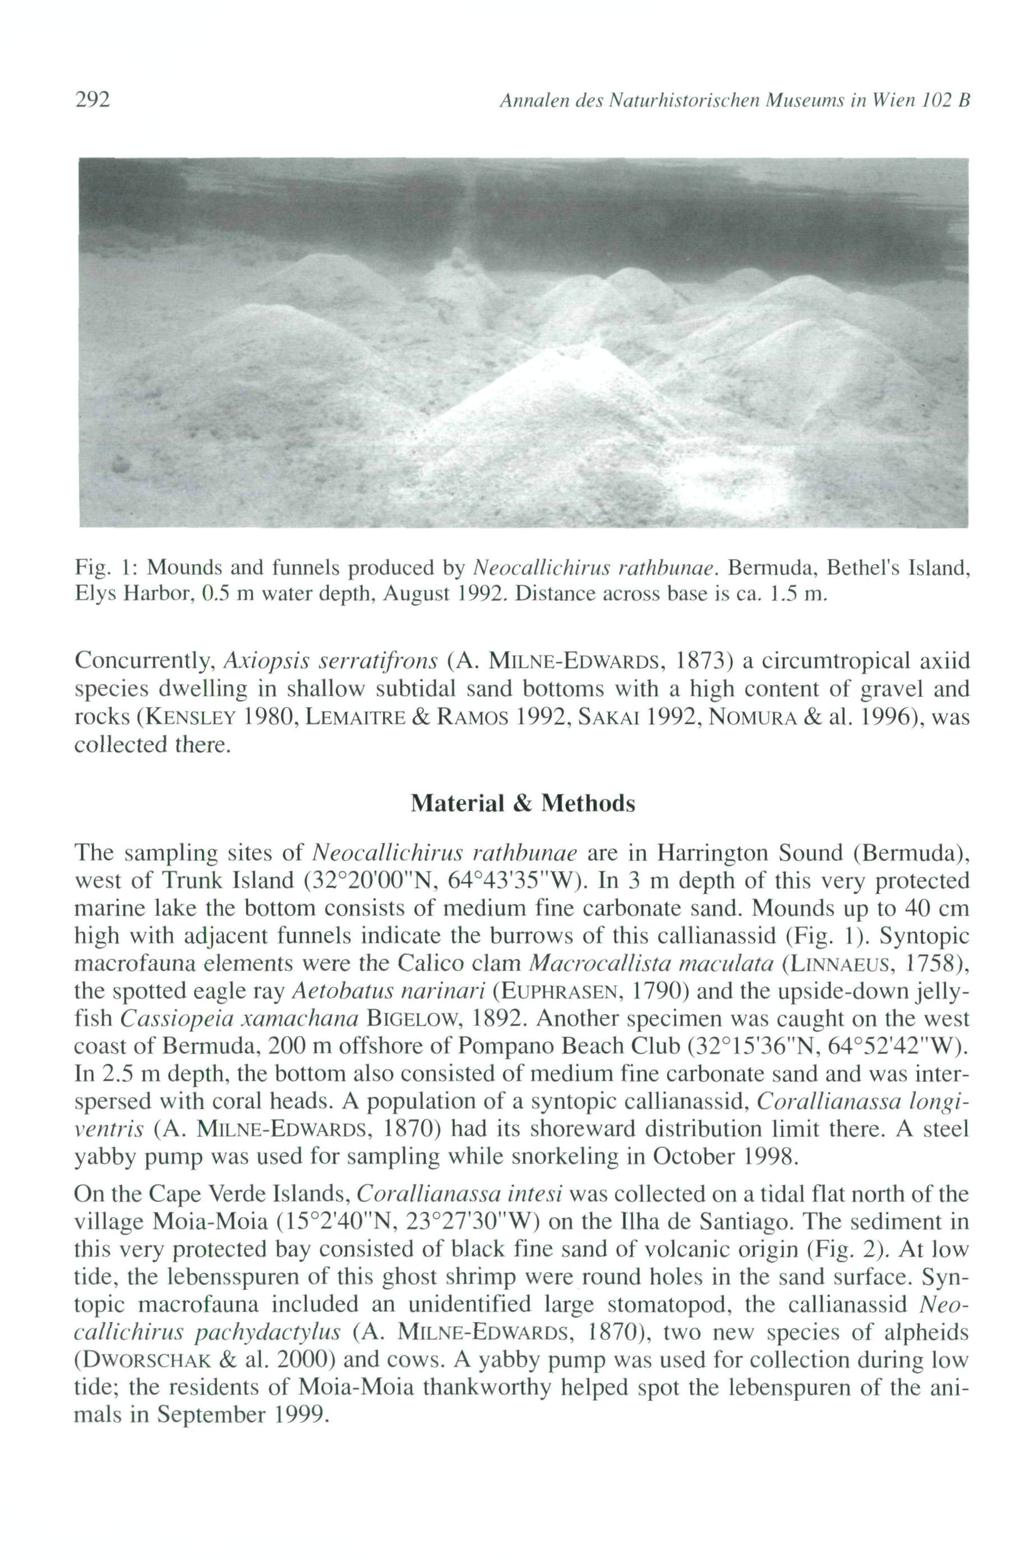 292 Annalen des Naturhistorischen Museums in Wien 102 B Fig. 1 : Mounds and funnels produced by Neocallichirus rathbunae. Bermuda, Bethel's Island, Elys Harbor, 0.5 m water depth, August 1992.